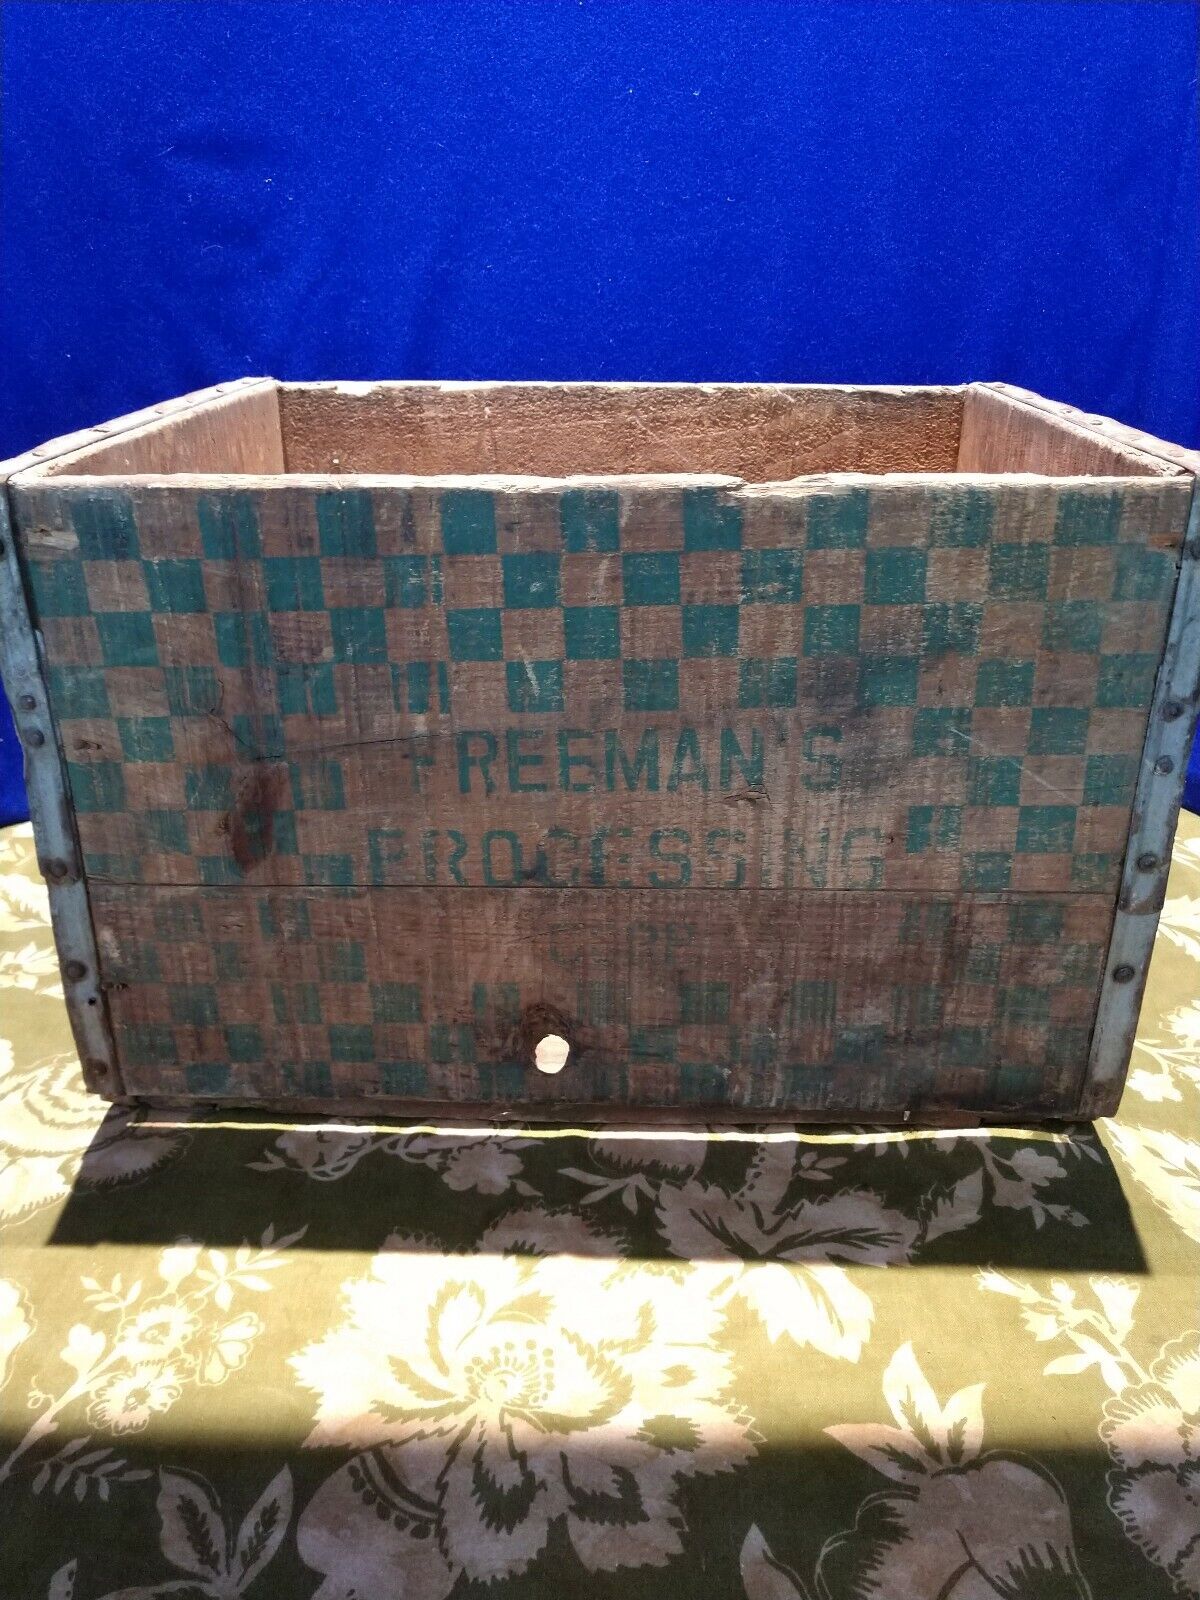 Freeman's Processing CORP. Rare VINTAGE WOODEN MILK BOX FROM BROOKLYN, NY,